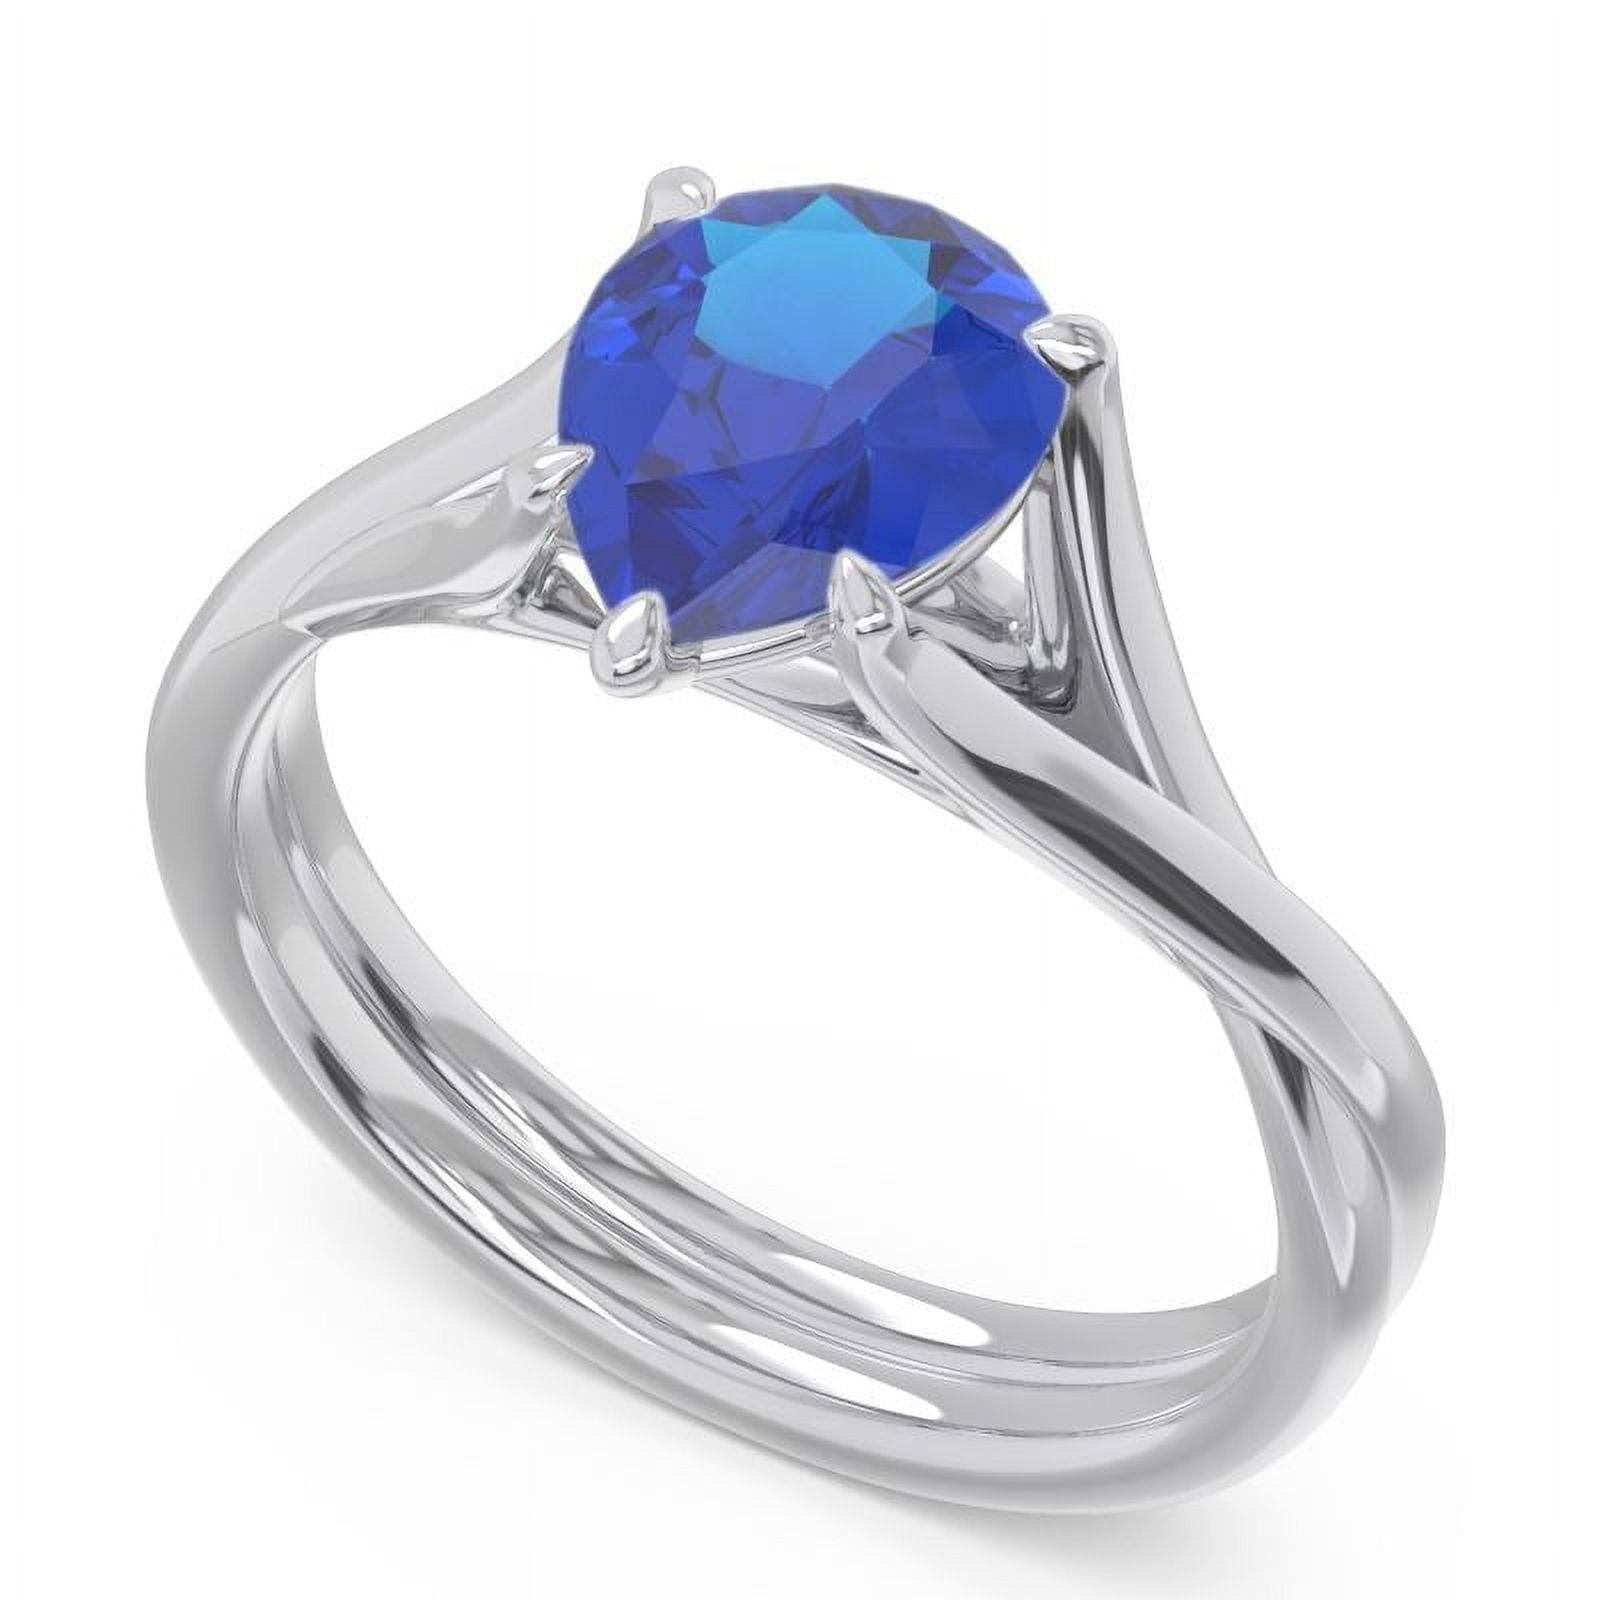 2.00 Carat Stunning Pear Cut Blue Sapphire Gemstone Solitaire ...